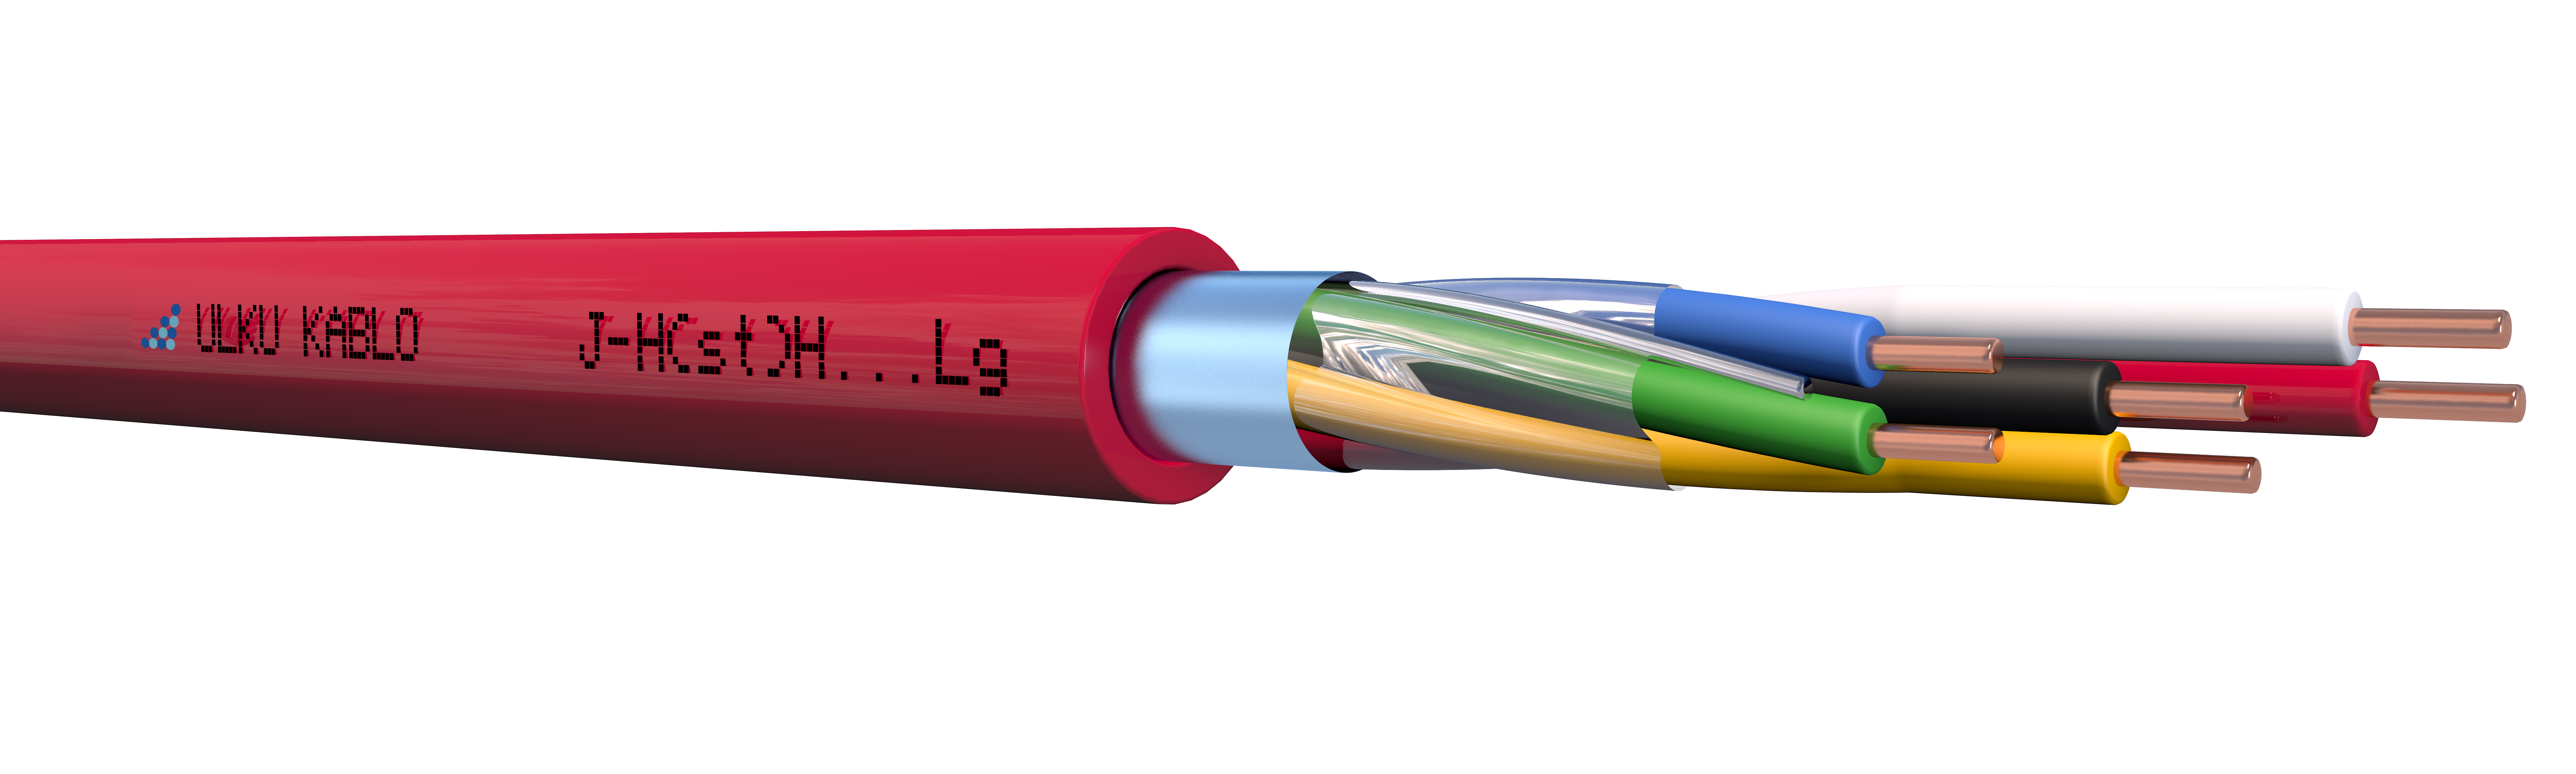 Ülkü Kablo J-H(St)H...Lg 3x2x1,50 mm²+0,80mm